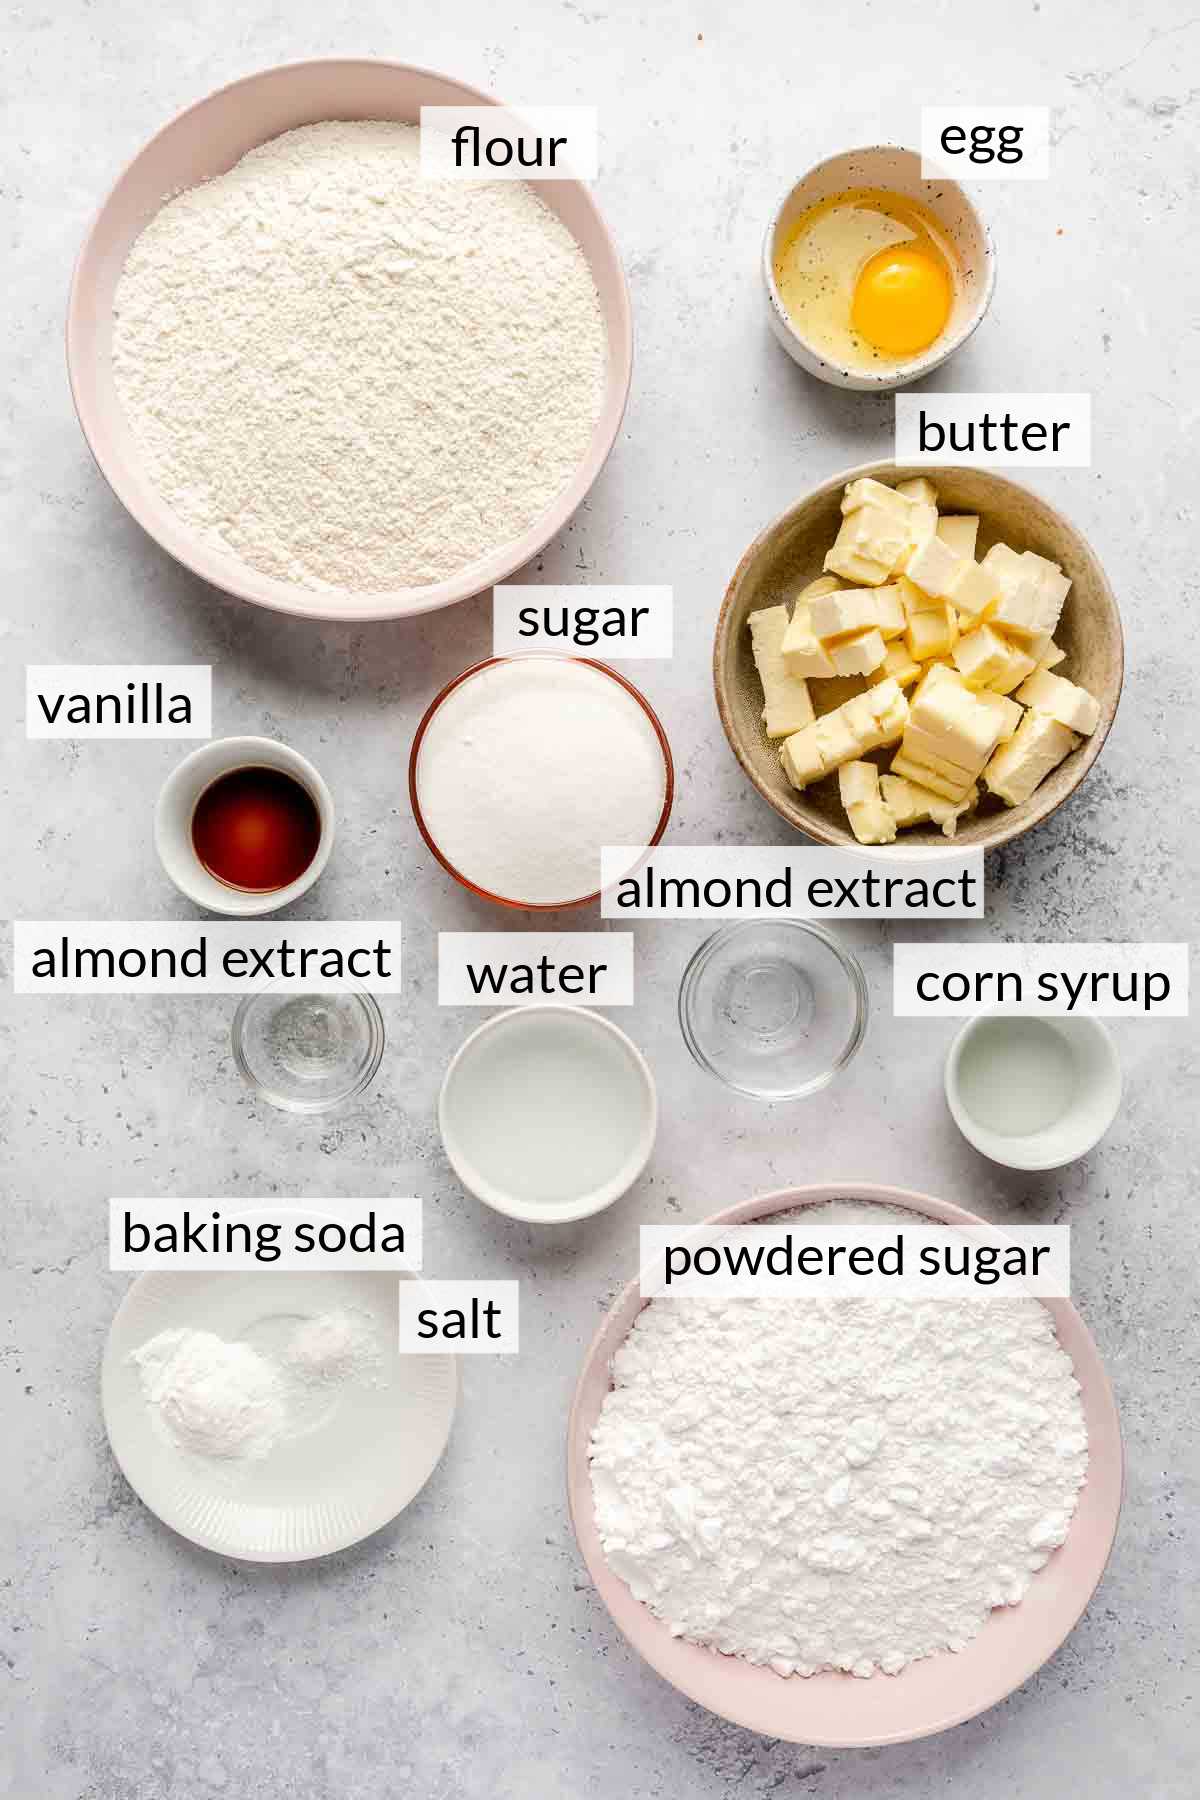 Flour, butter, sugar, egg, vanilla, powdered sugar, corn syrup, baking soda and salt in small bowls.